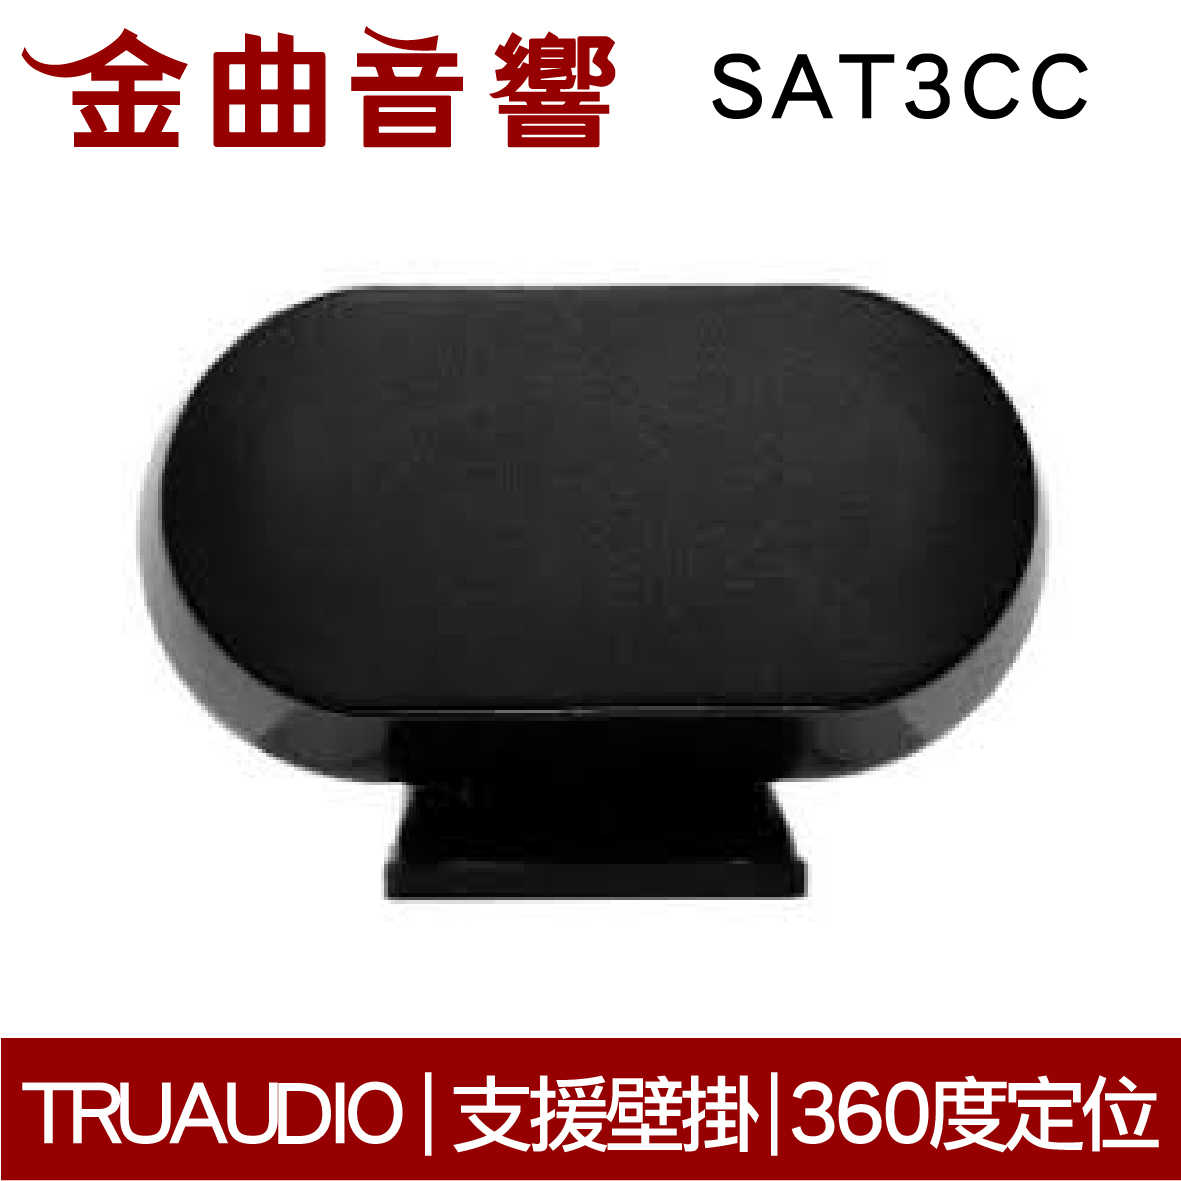 Truaudio SAT3CC 黑 360度 支援壁掛 磁性安裝 揚聲器 | 金曲音響